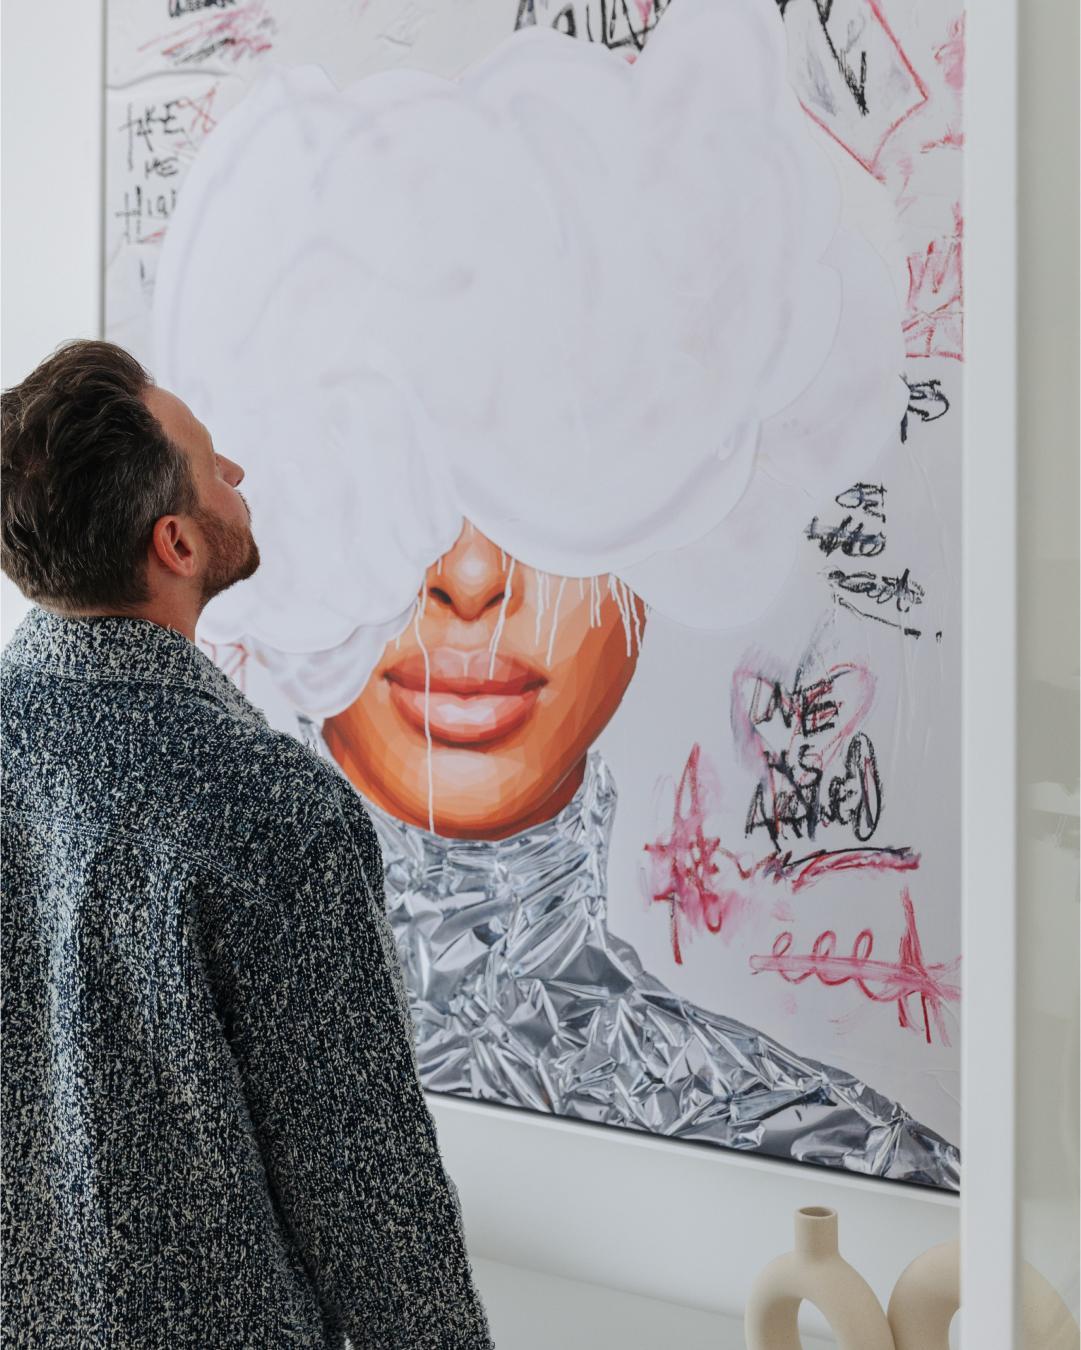 Brent Rosenberg admiring his painting 'taken me' 